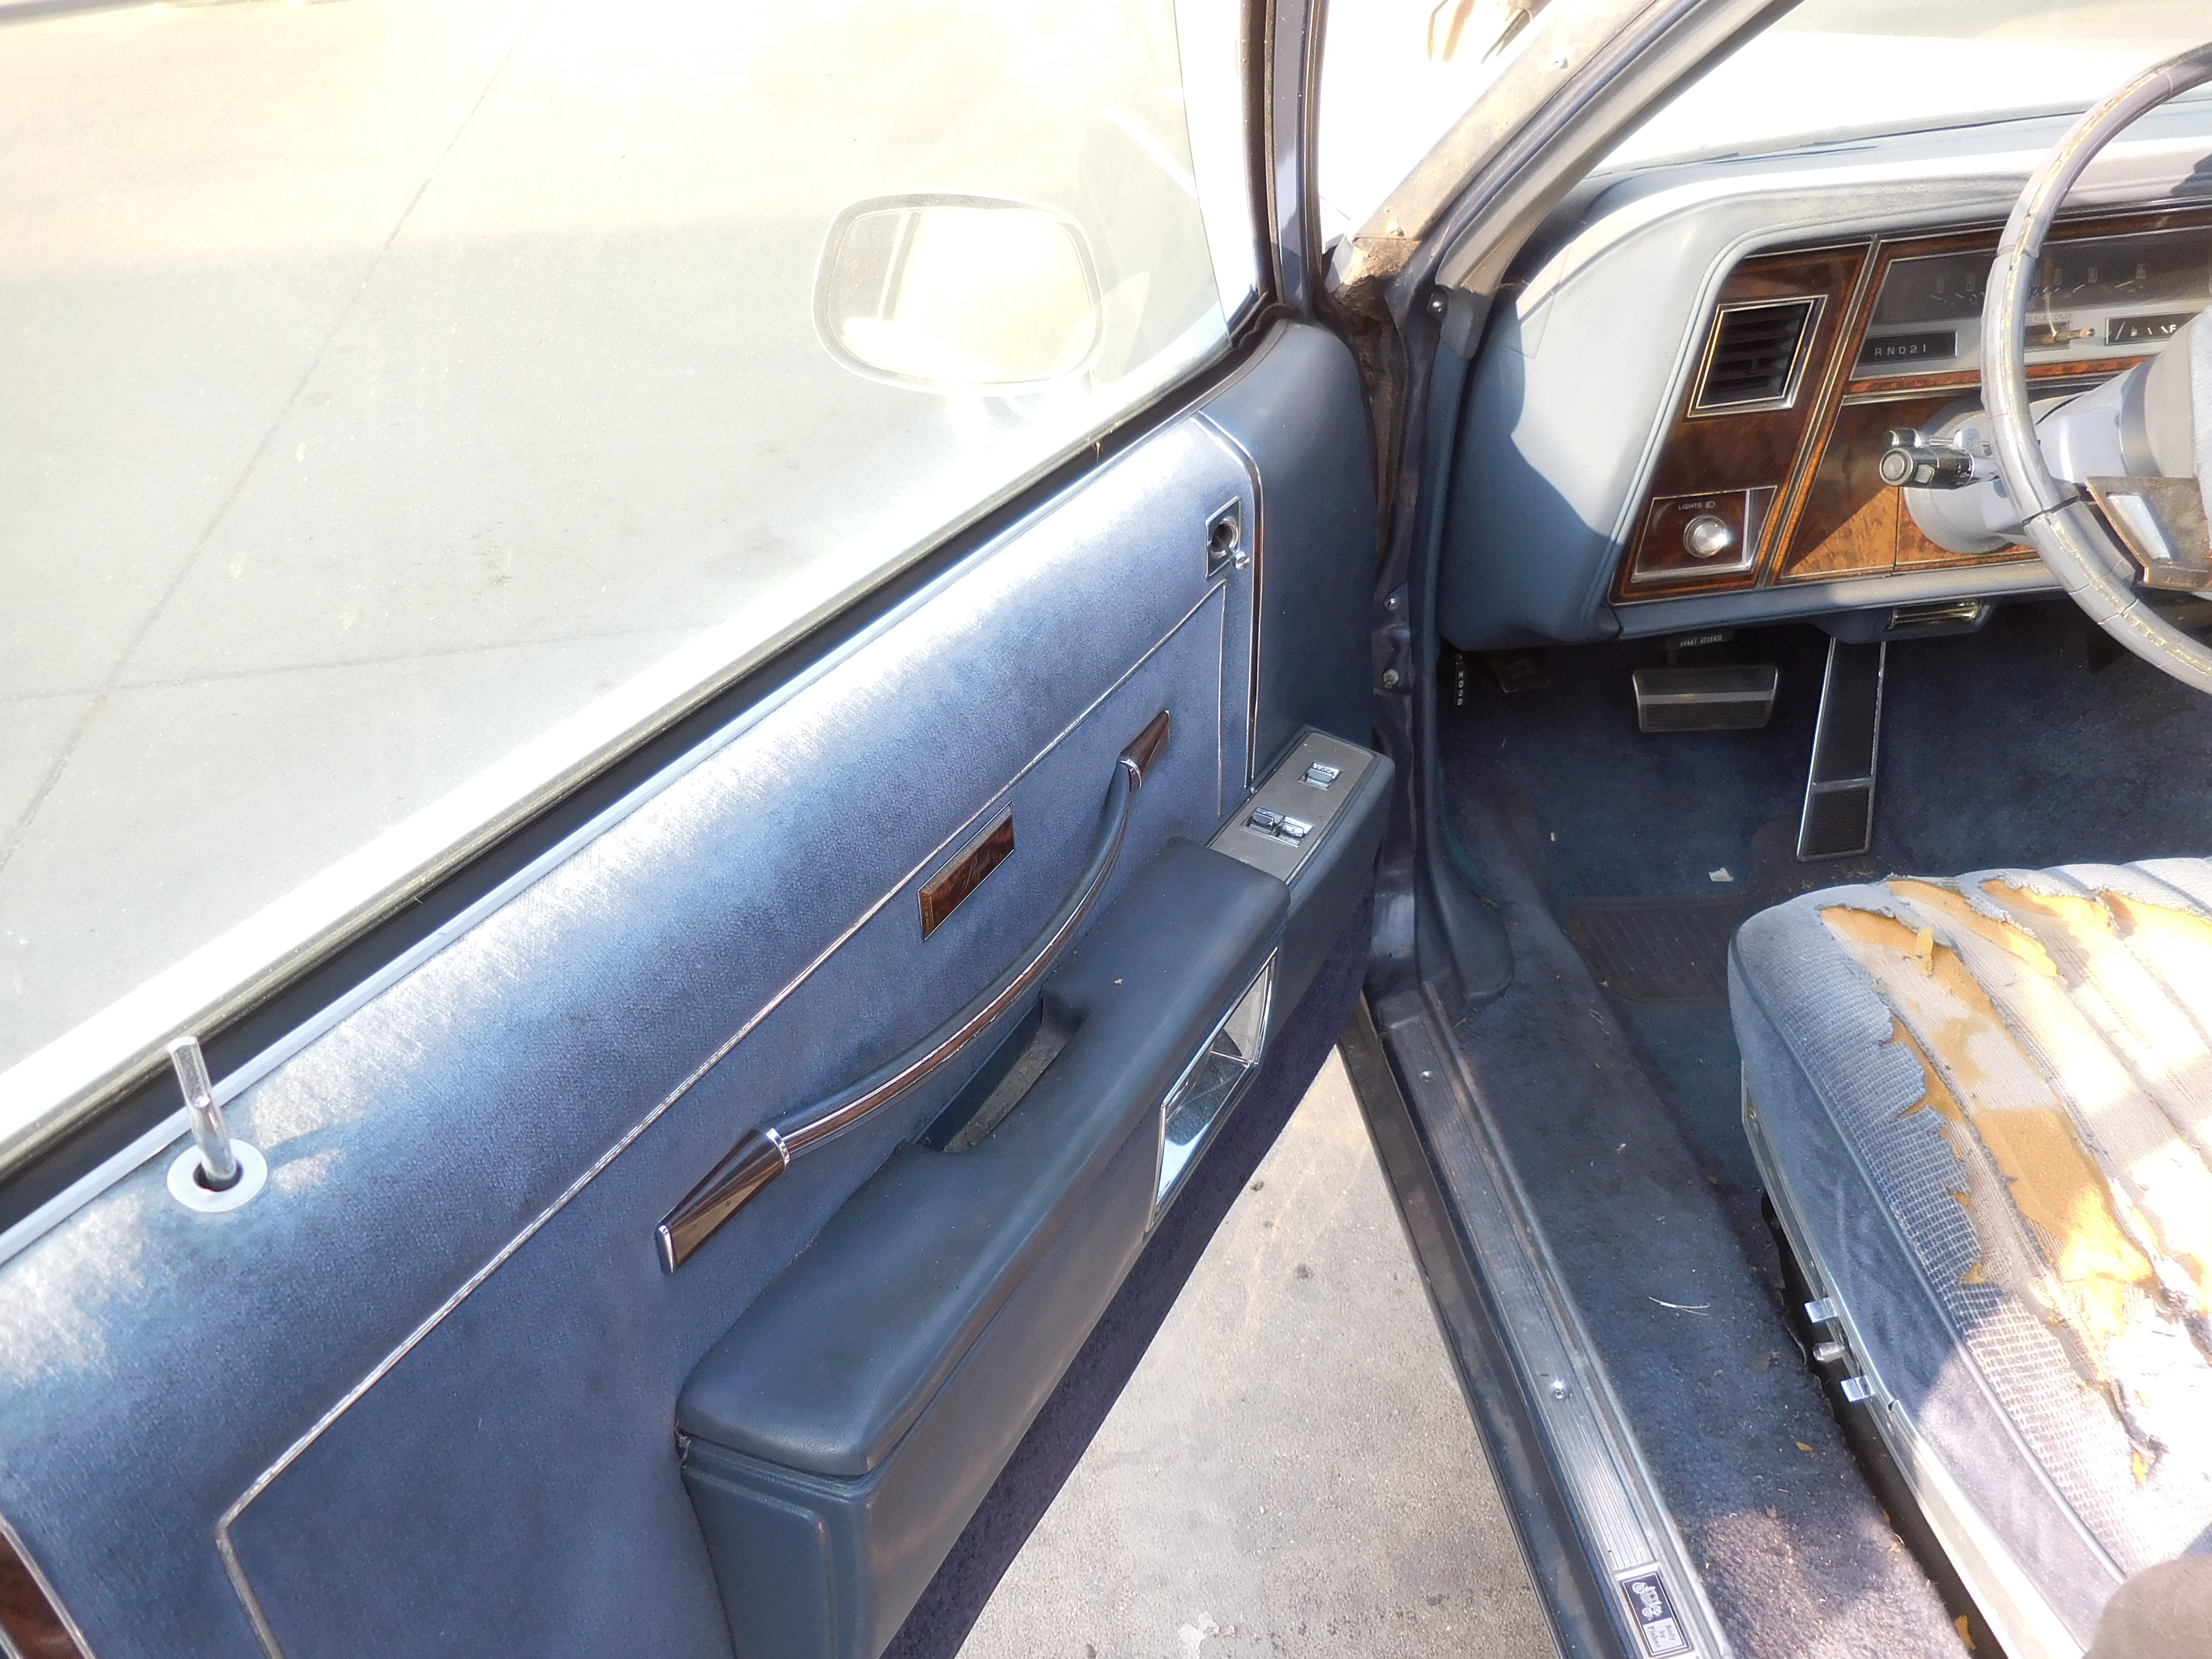 1984, oldsmobile,88, fender, door,bumper,front,rear,quarter,panel,fillers, header, panel,hood, glass,moldings,